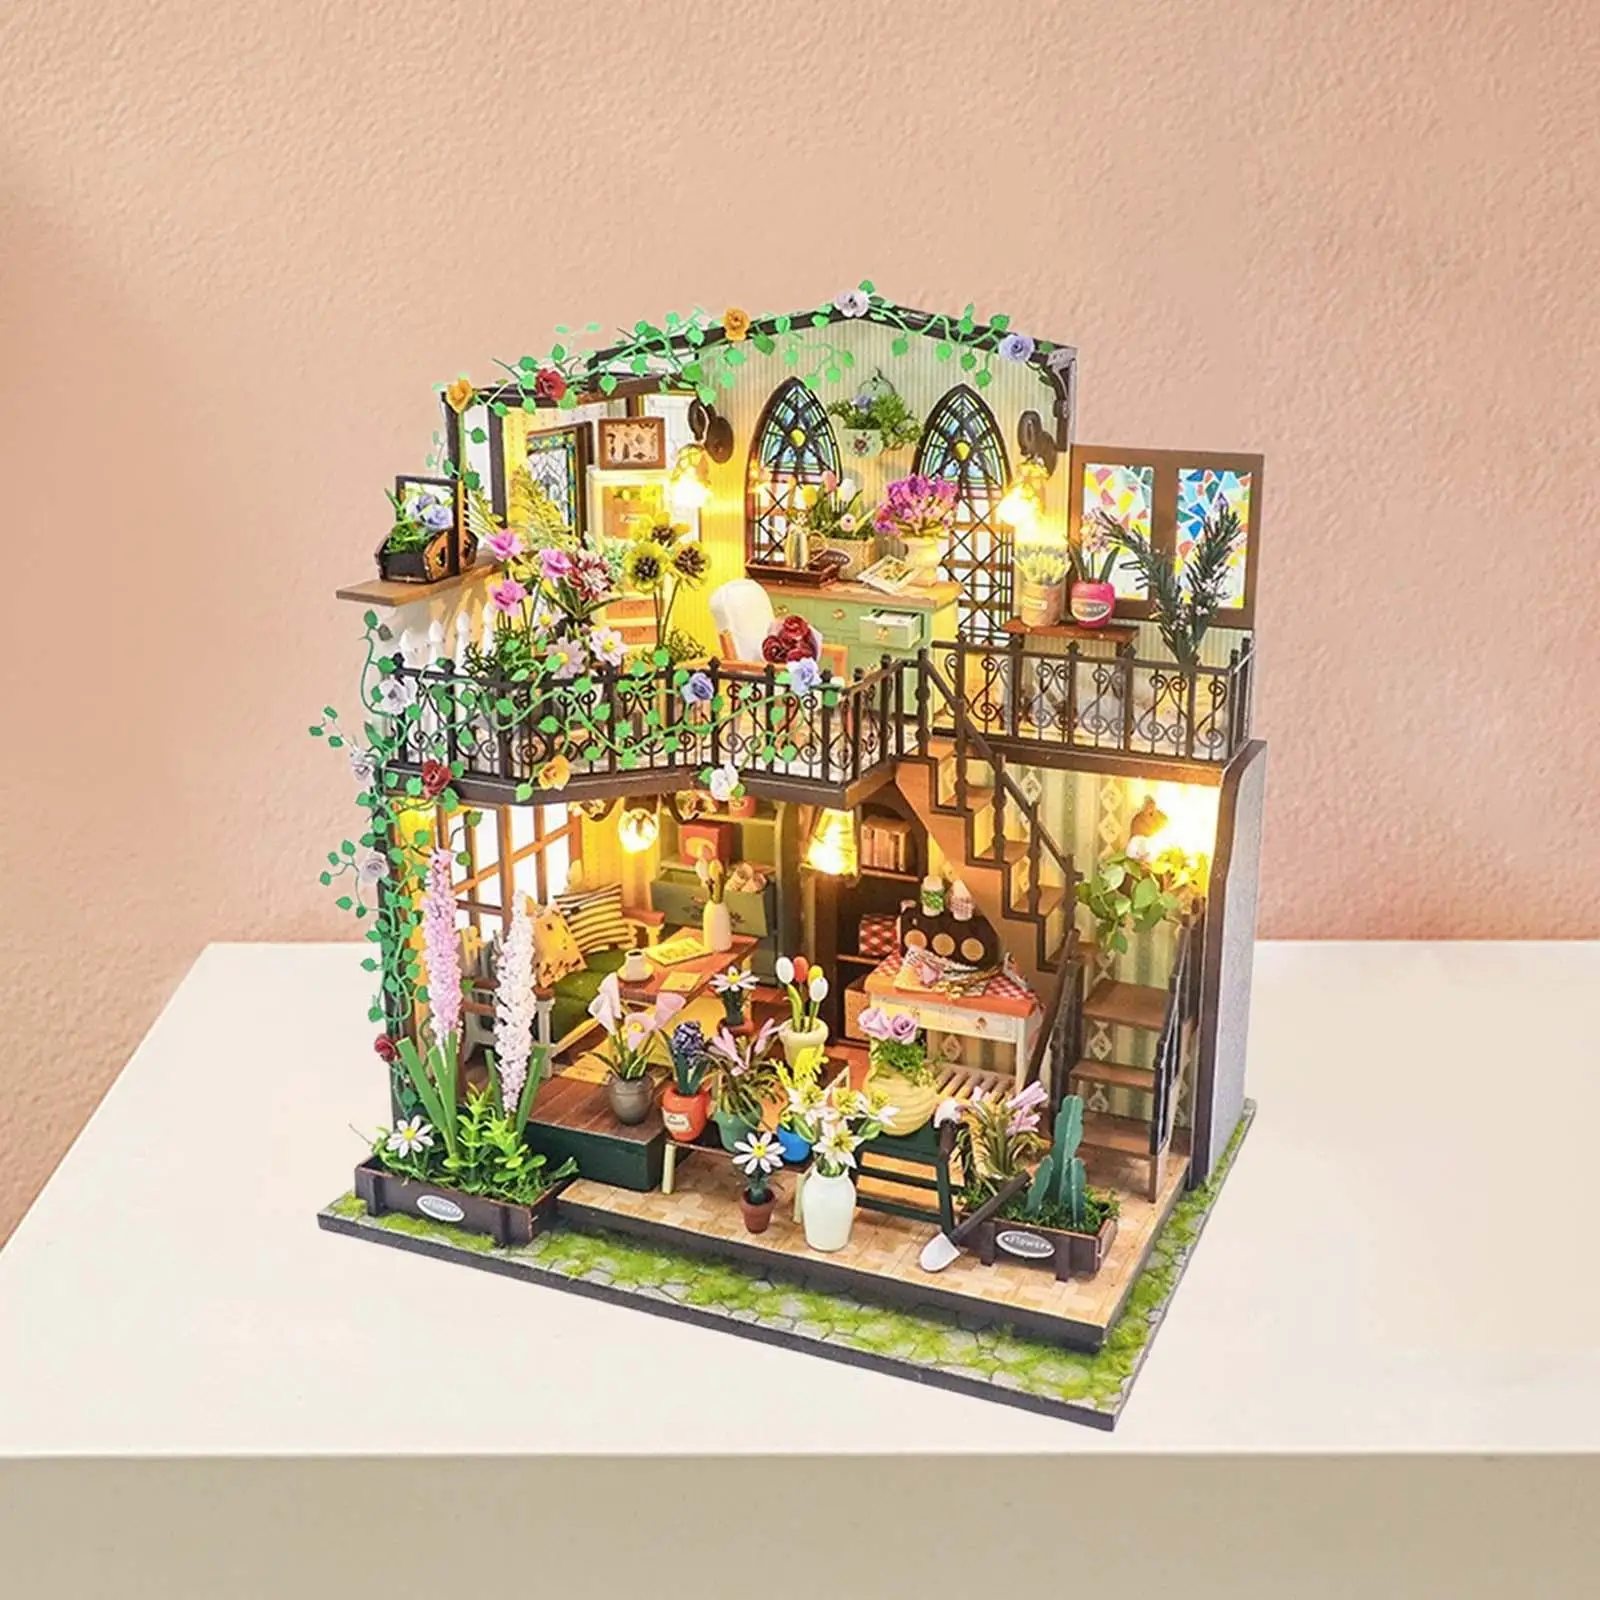 

DIY Miniature Dollhouse Kits DIY Crafts Tiny House Building Set Miniature Garden House for Adults Birthday Gift Kids Boys Girls